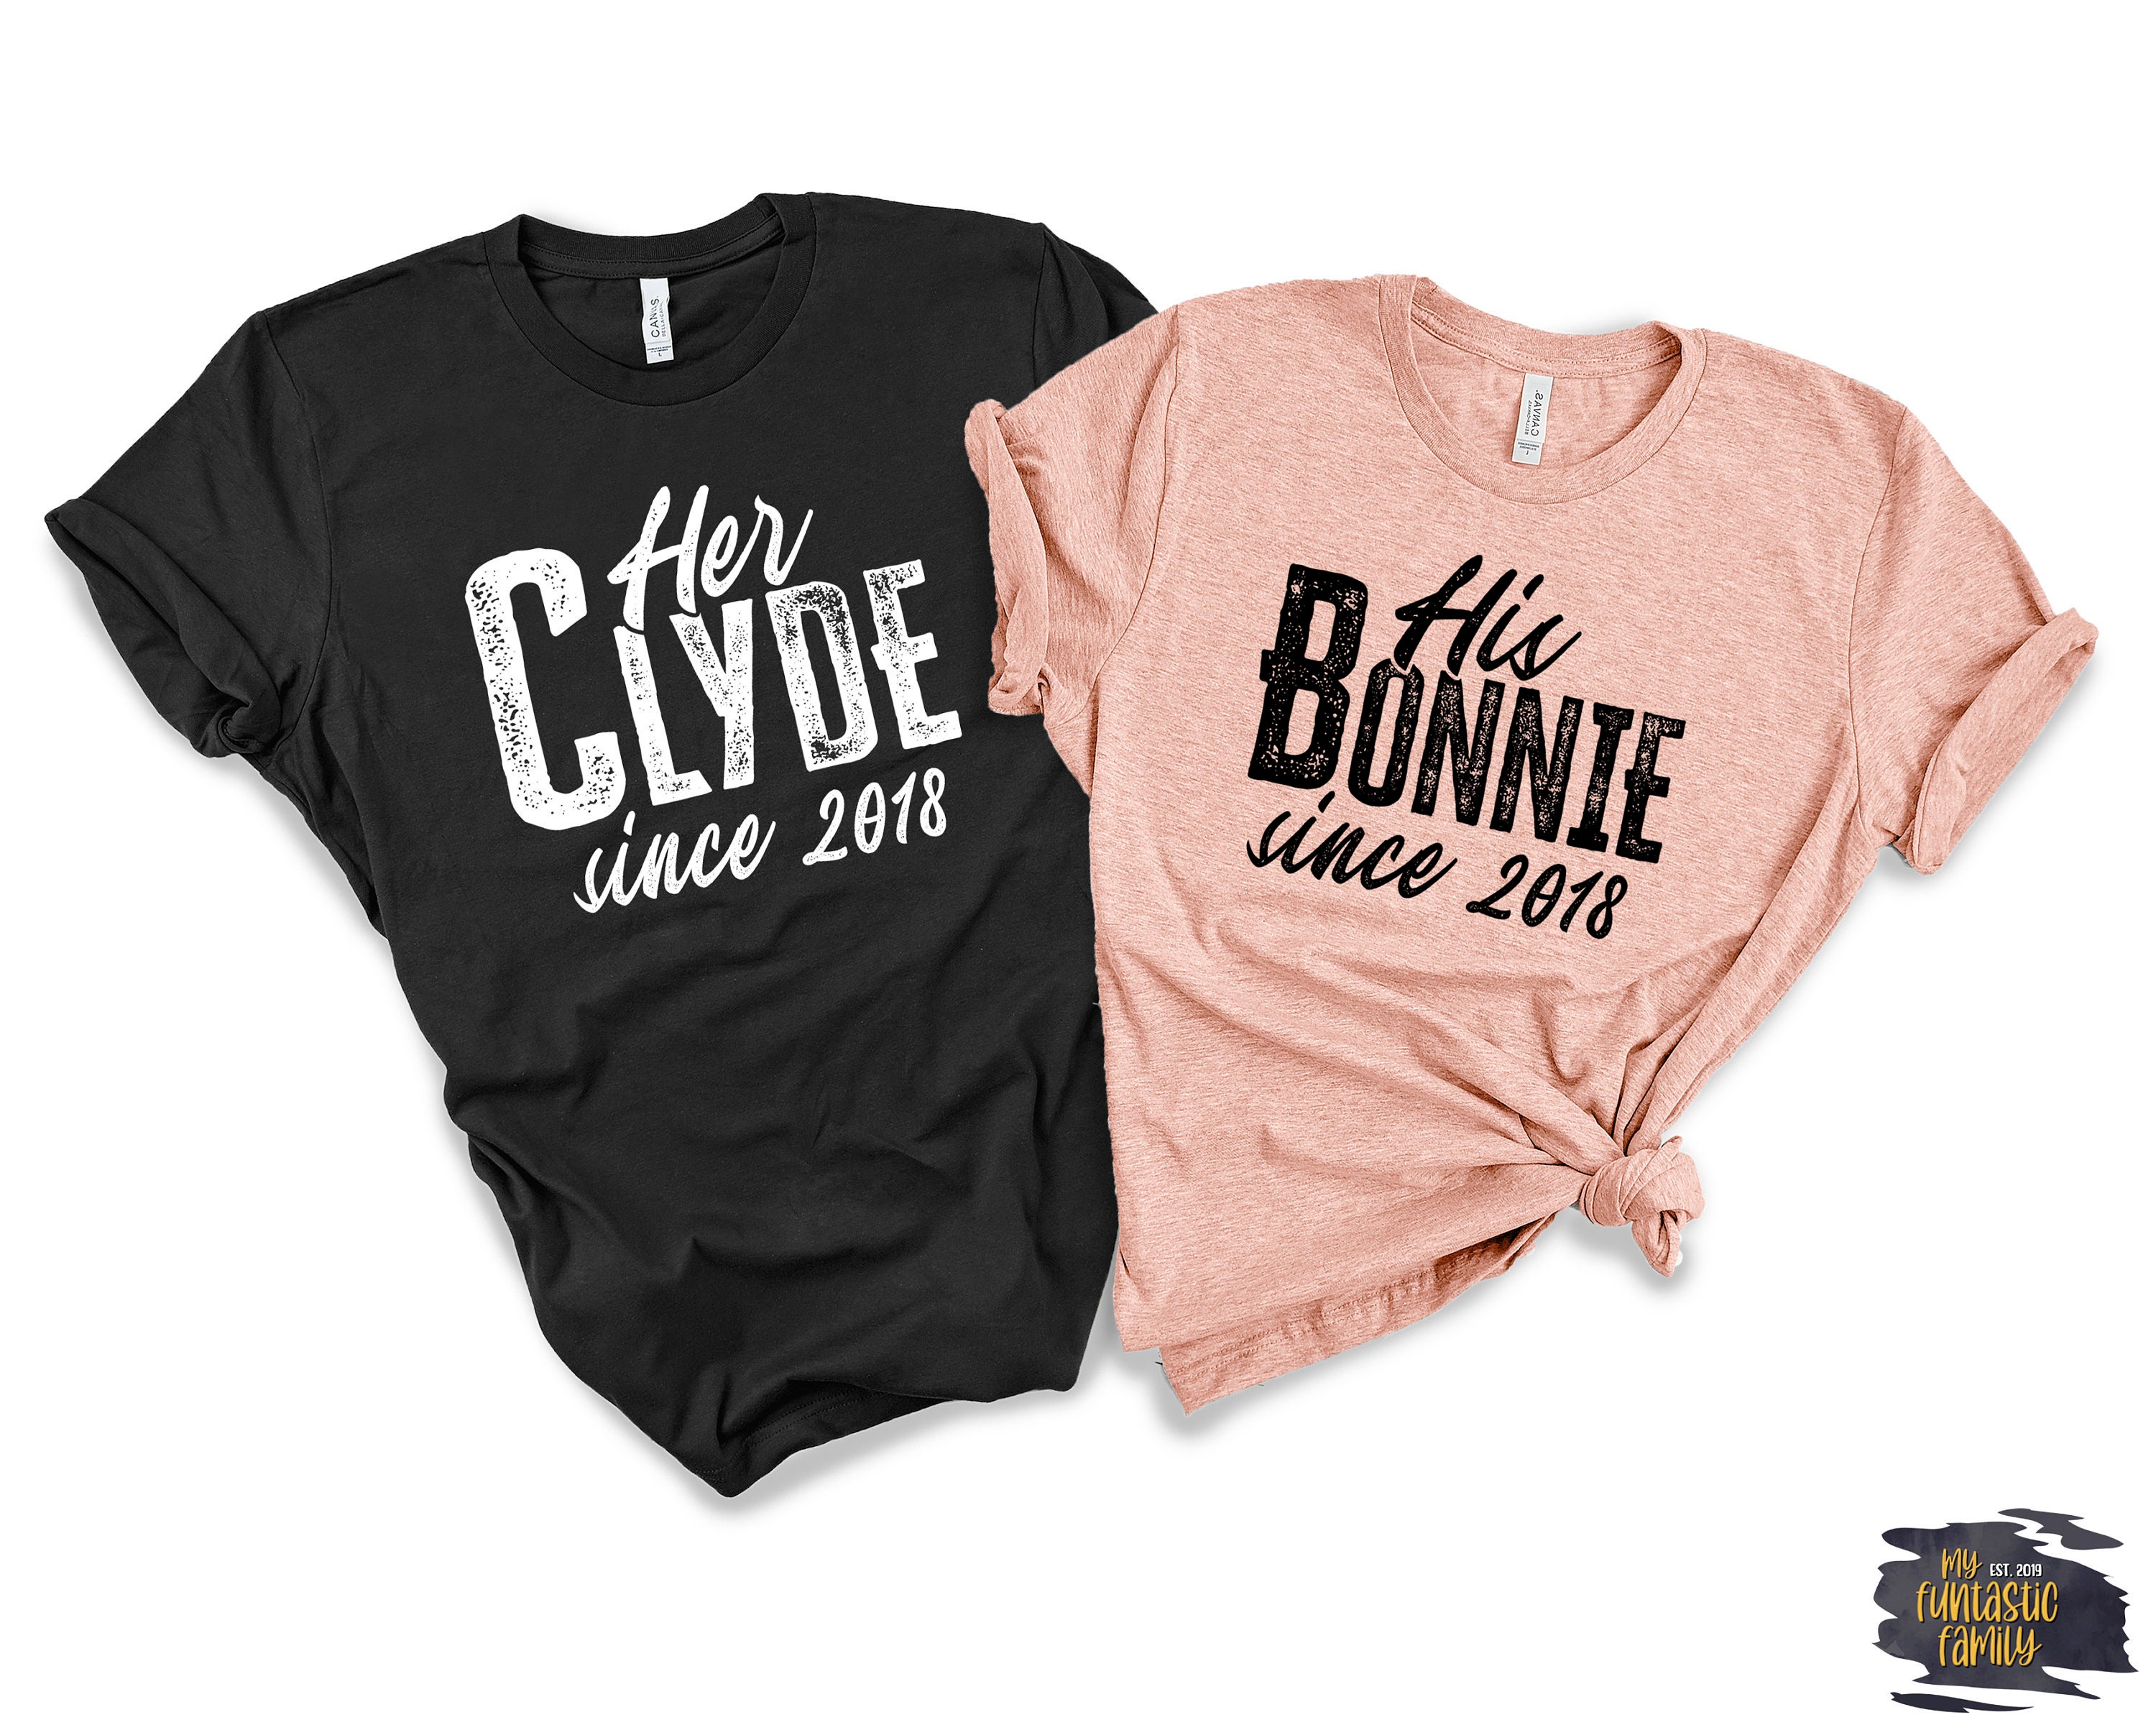 Bonnie Clyde Shirts, Bonnie and Clyde Shirts, Couple Shirts, Couples Shirts, Matching Shirts, Couple Outfits, Christmas Shirts, Bonnie Clyde